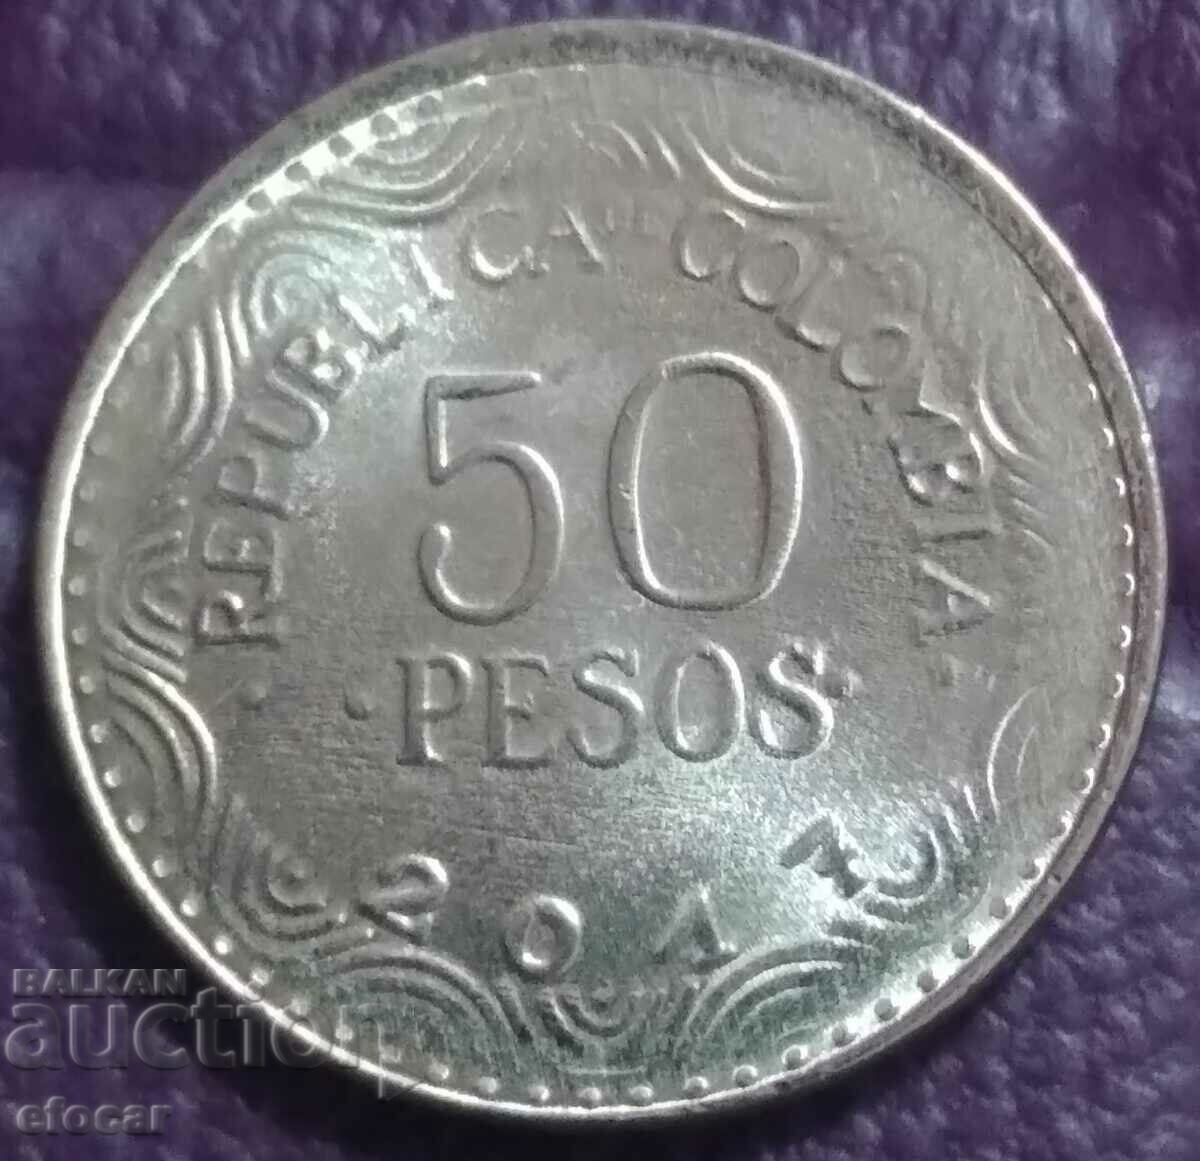 50 pesos Colombia 2017